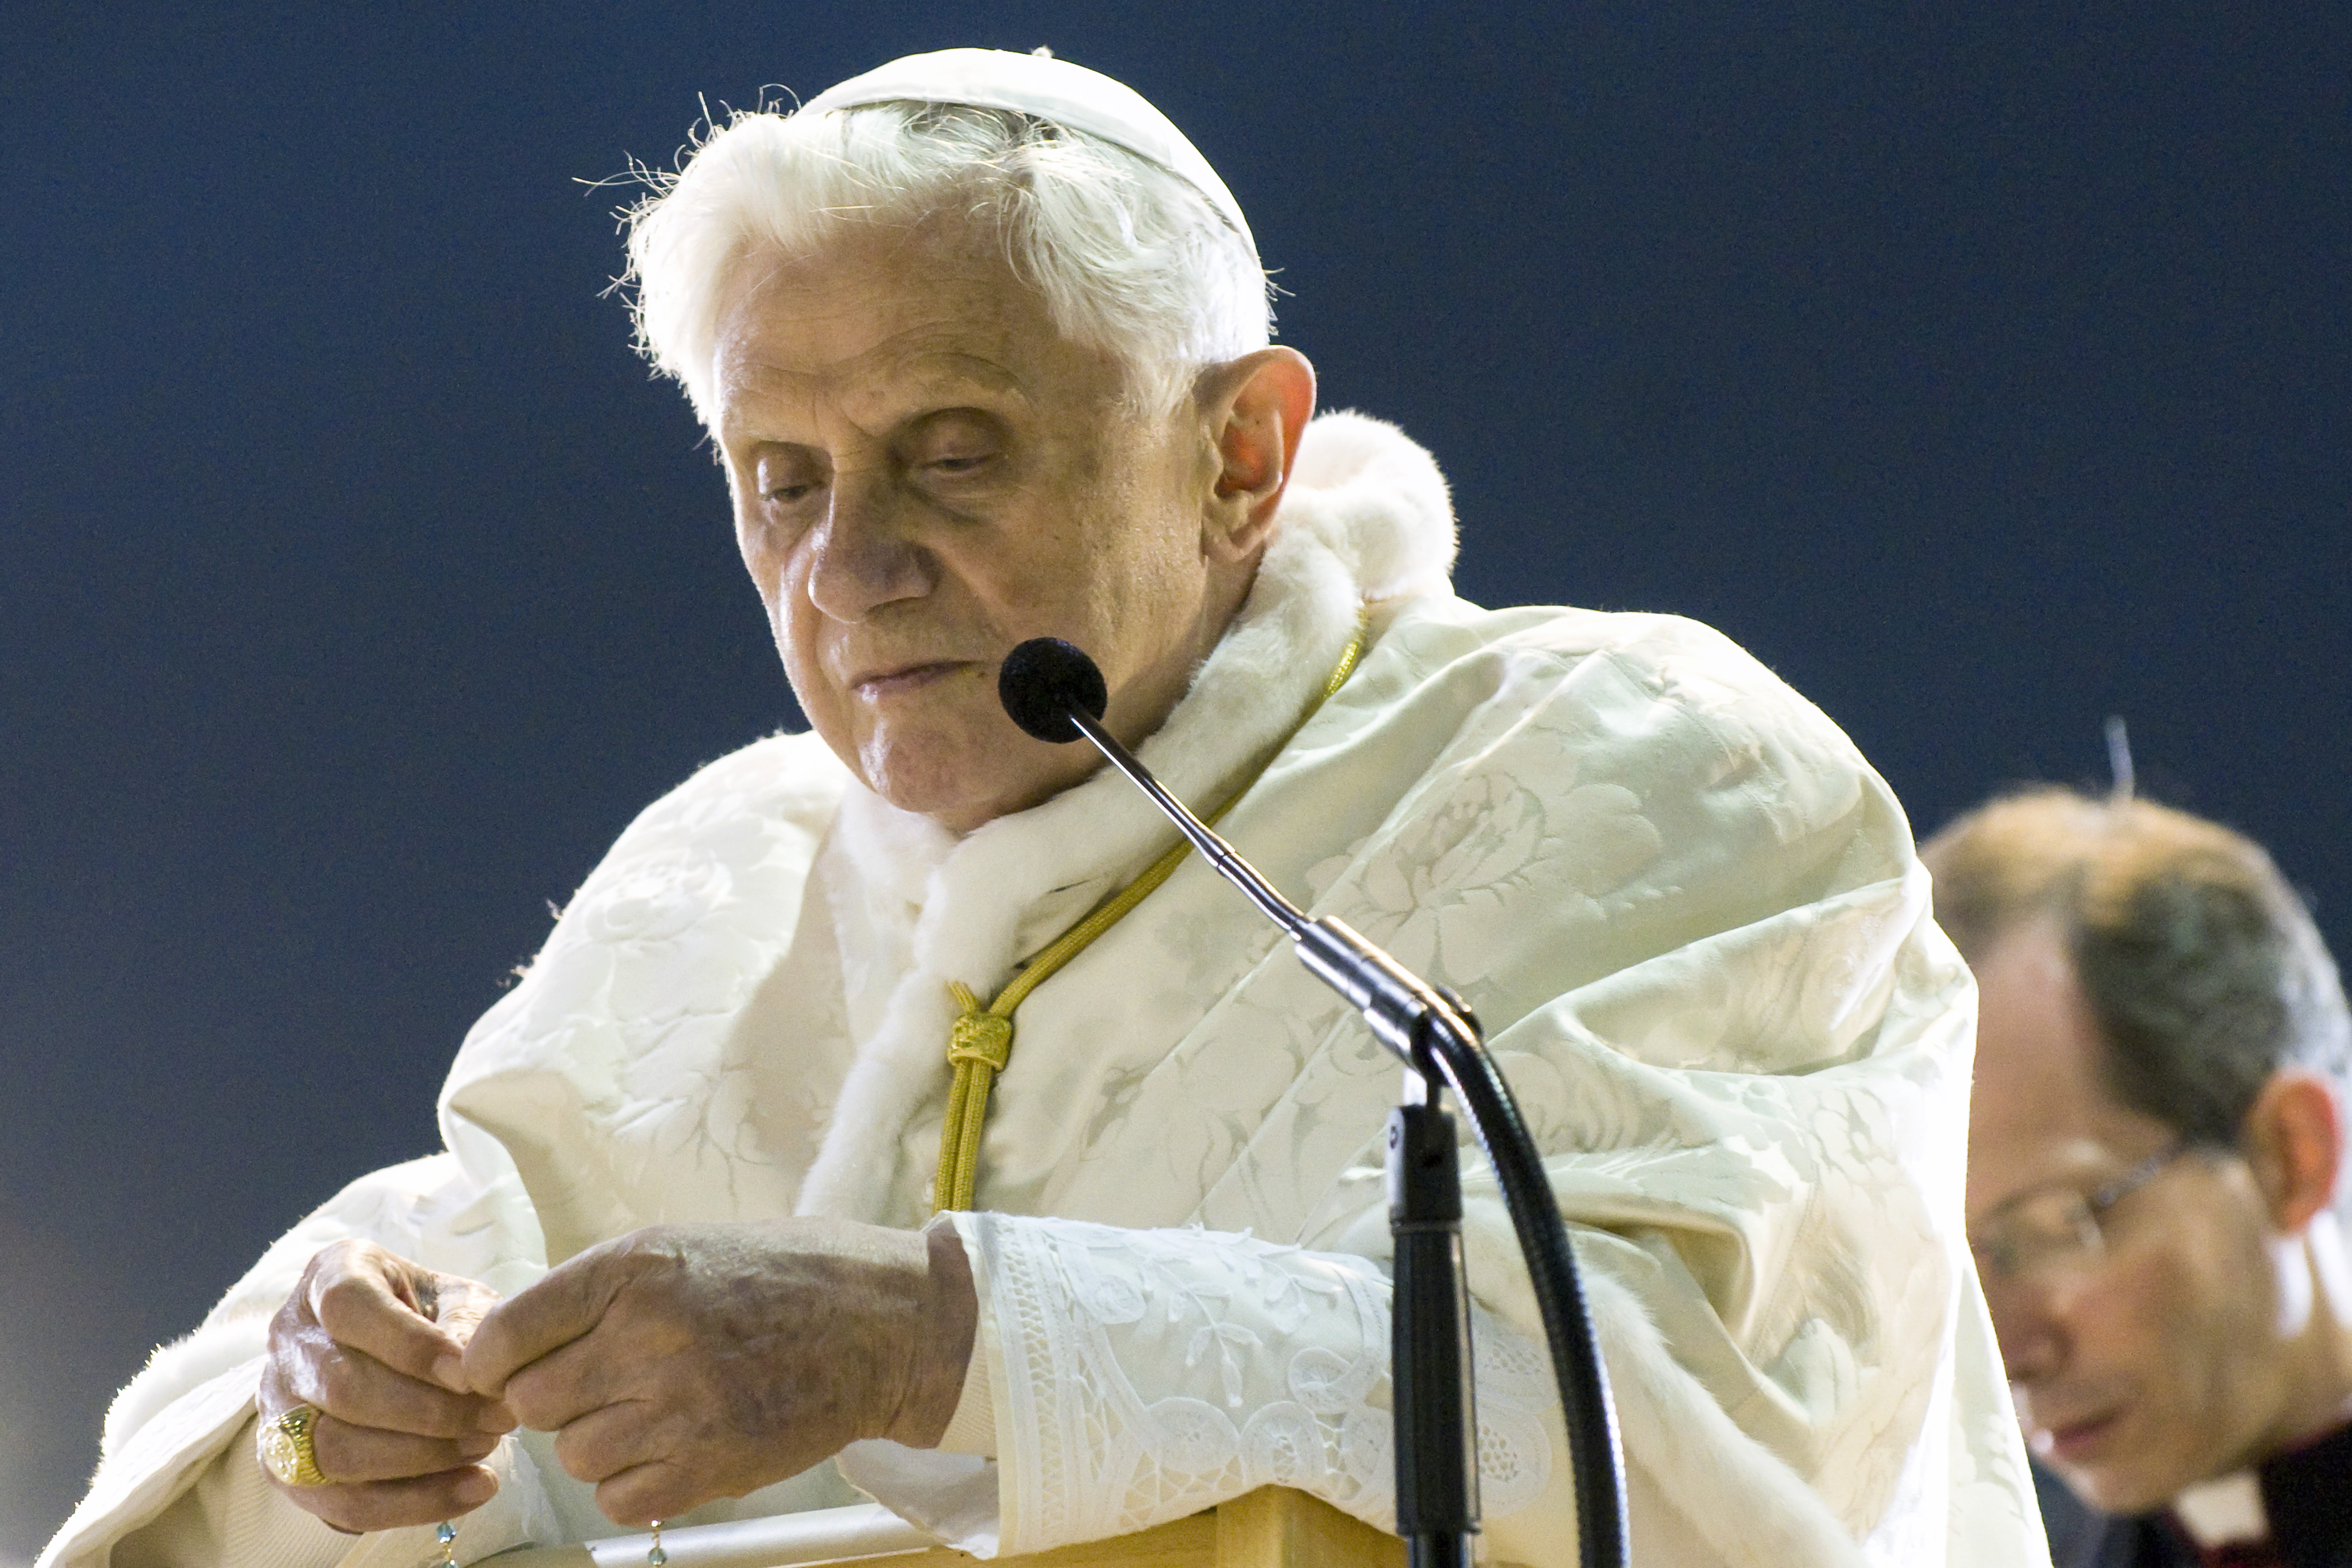 pope-benedict-xvi-pray-the-holy-rosary-m-mazur-www-thepapalvis